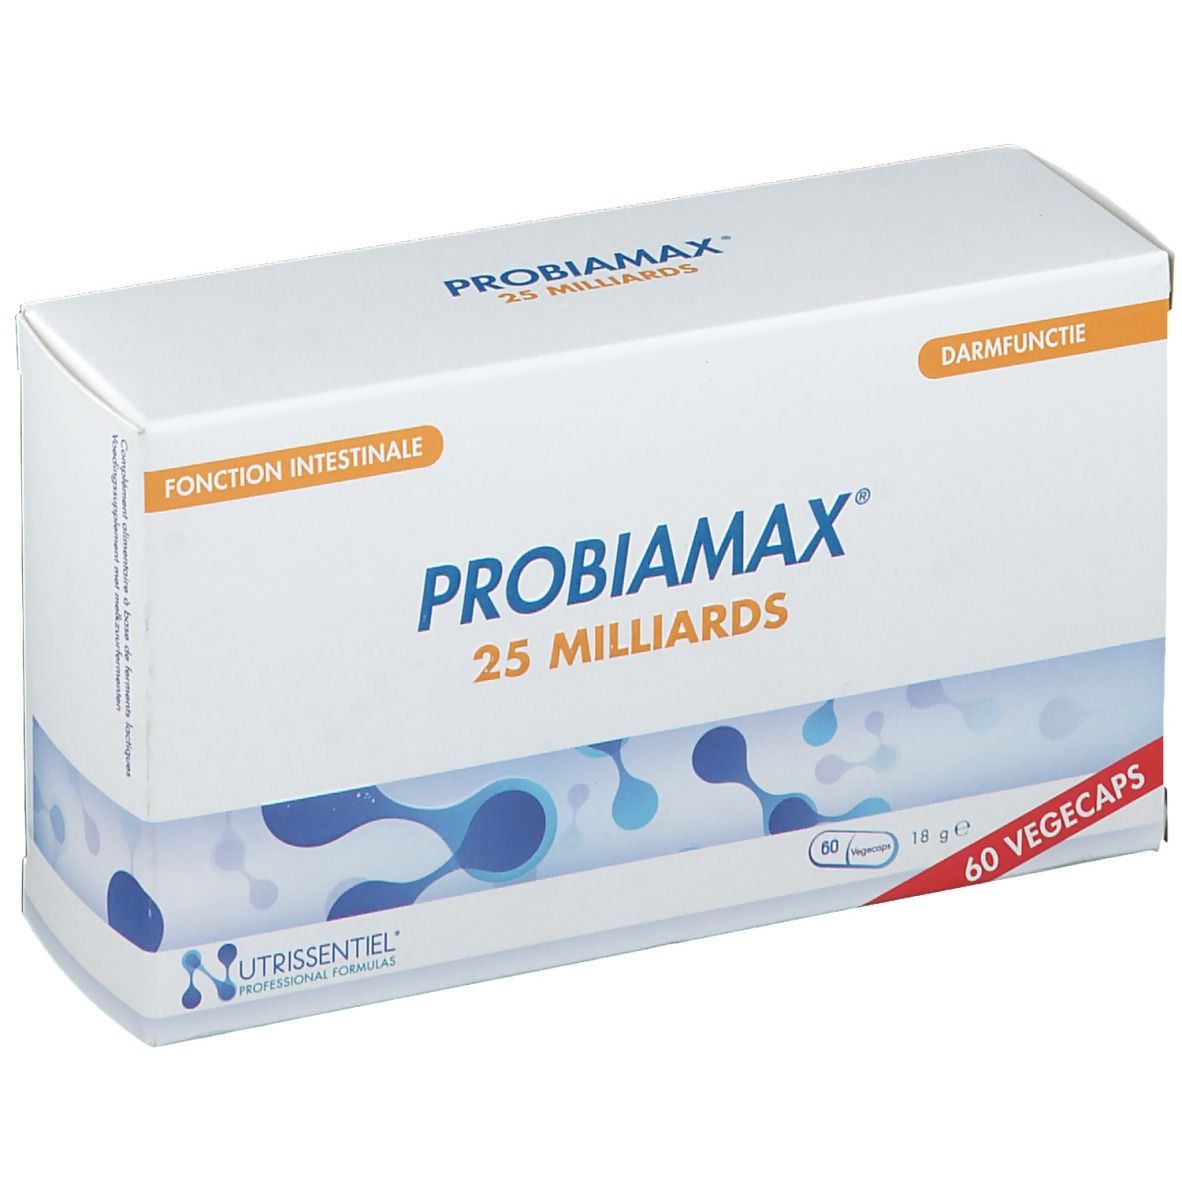 Image of PROBIAMAX® 25 Millarden